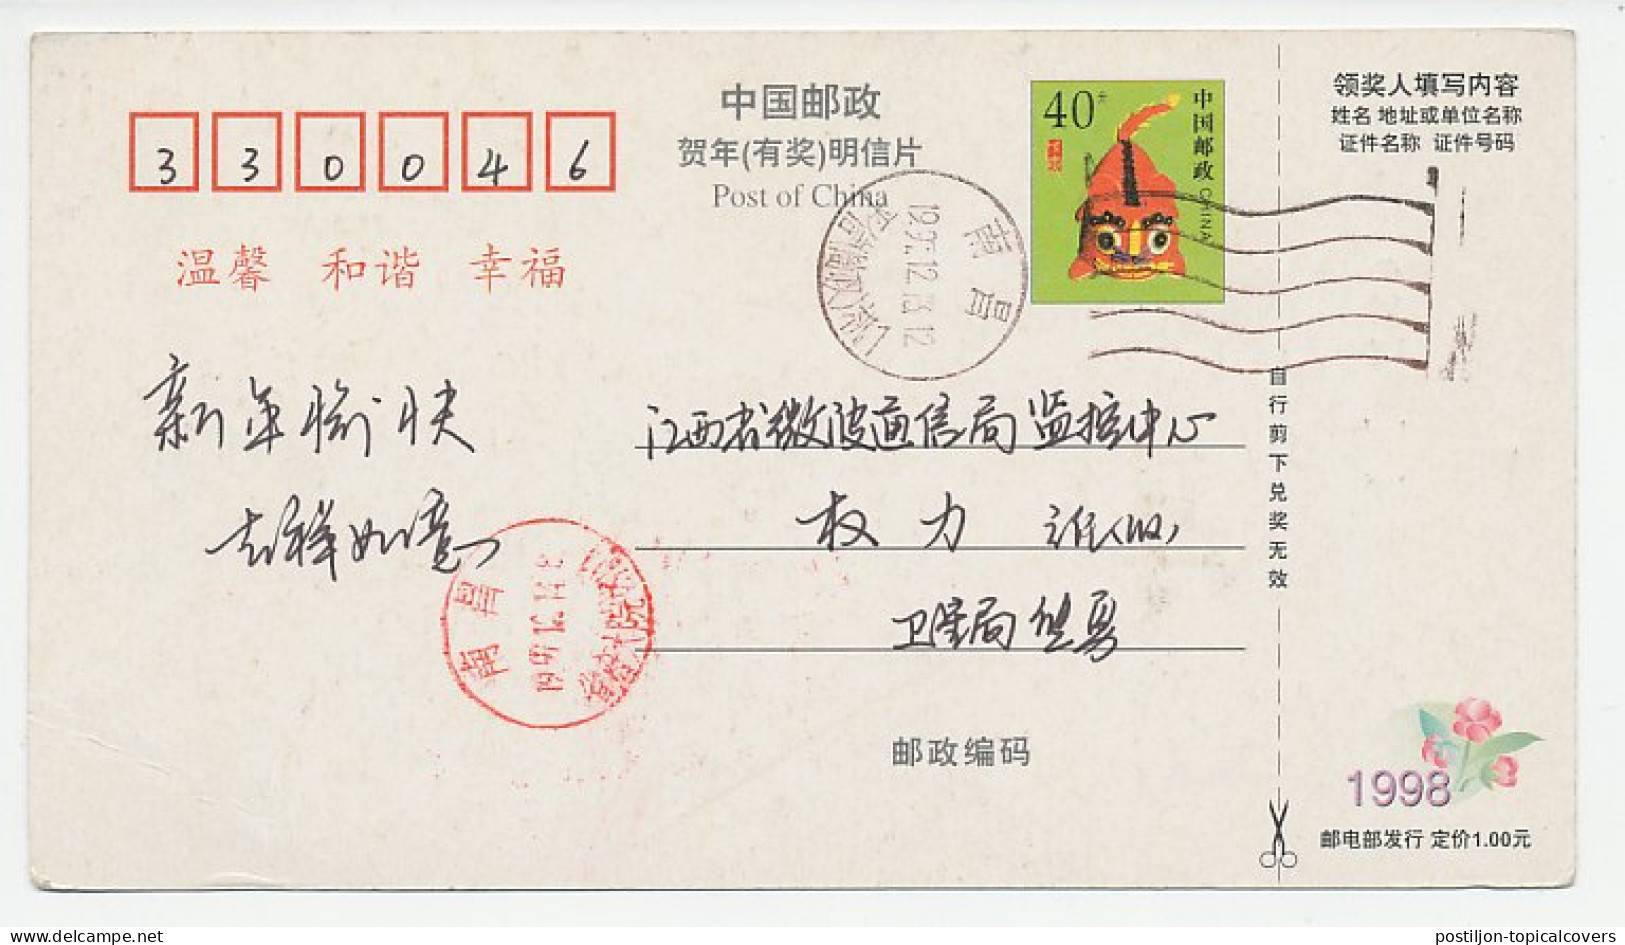 Postal Stationery China 1998 Computer - Globe - Informatique